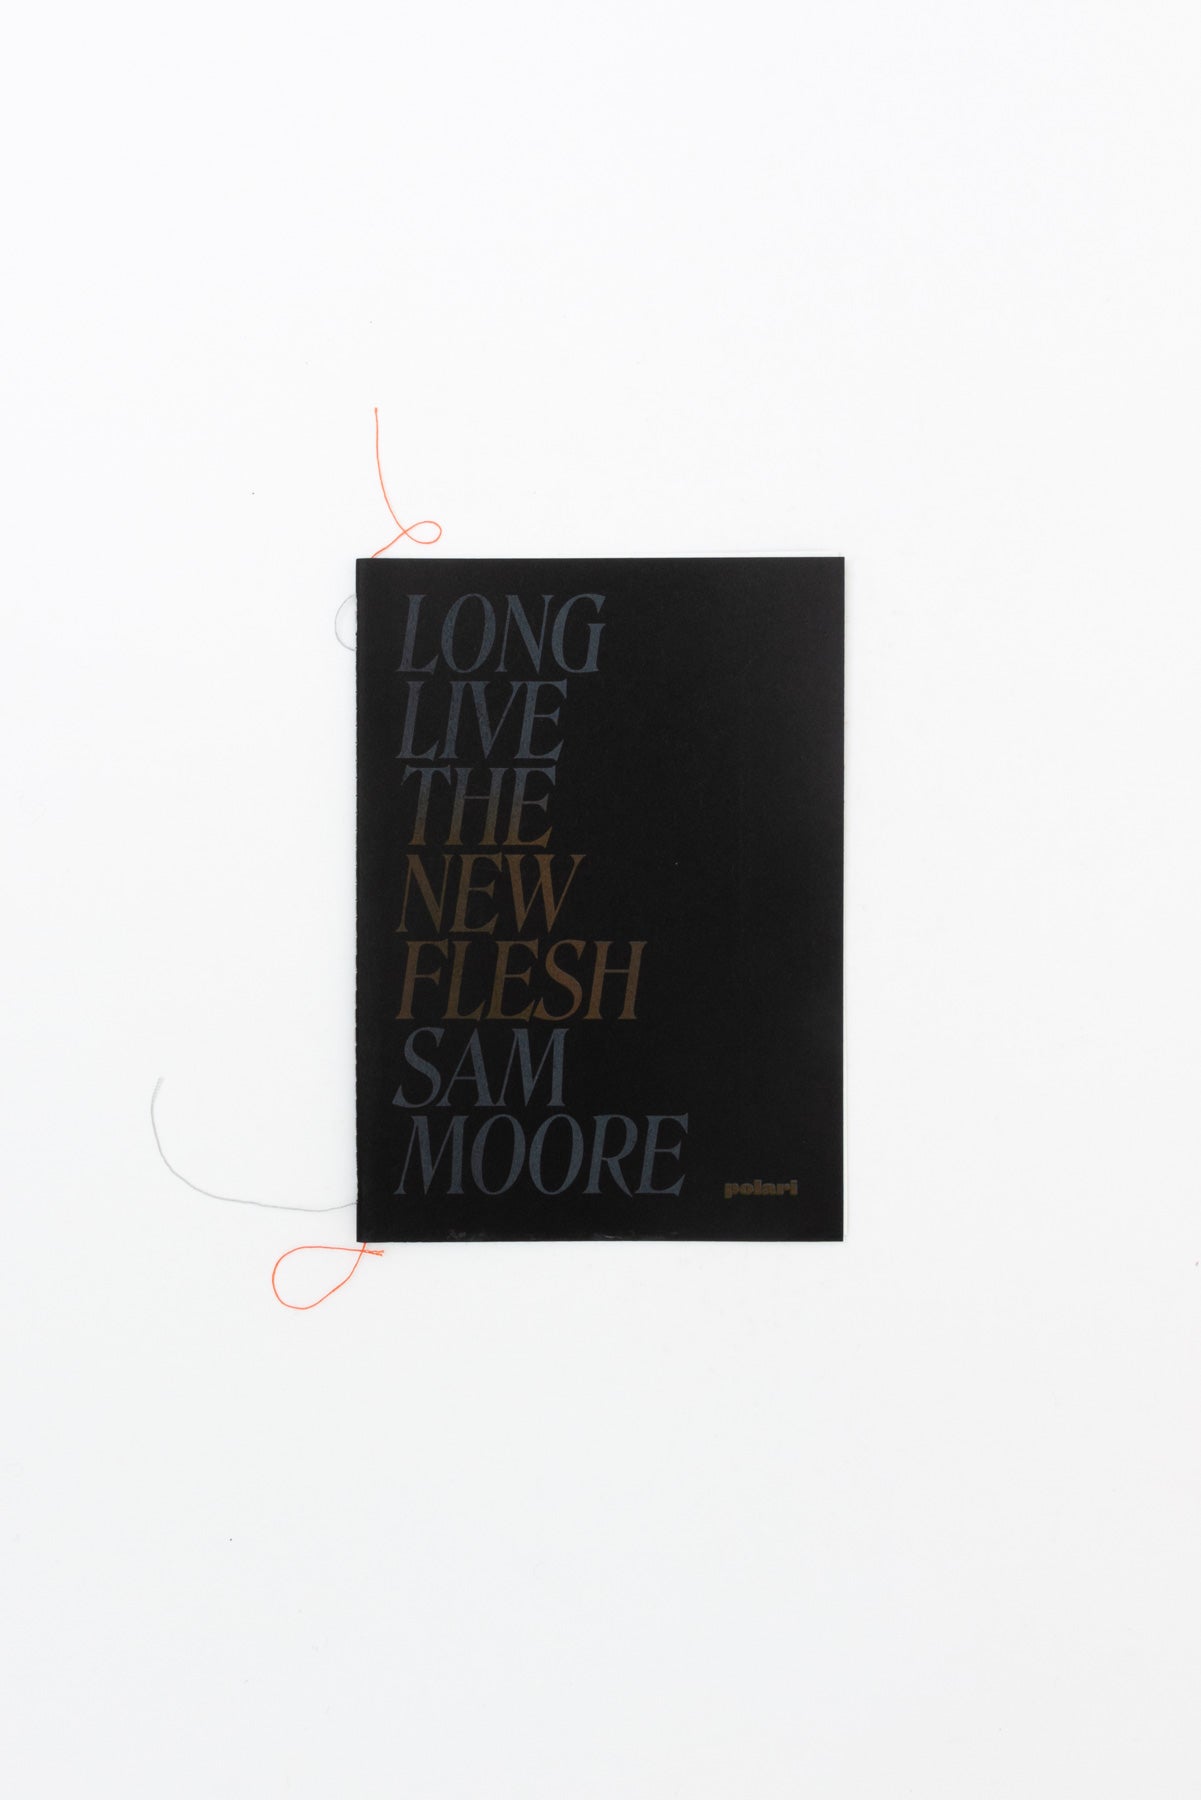 Long Live the New Flesh - Sam Moore